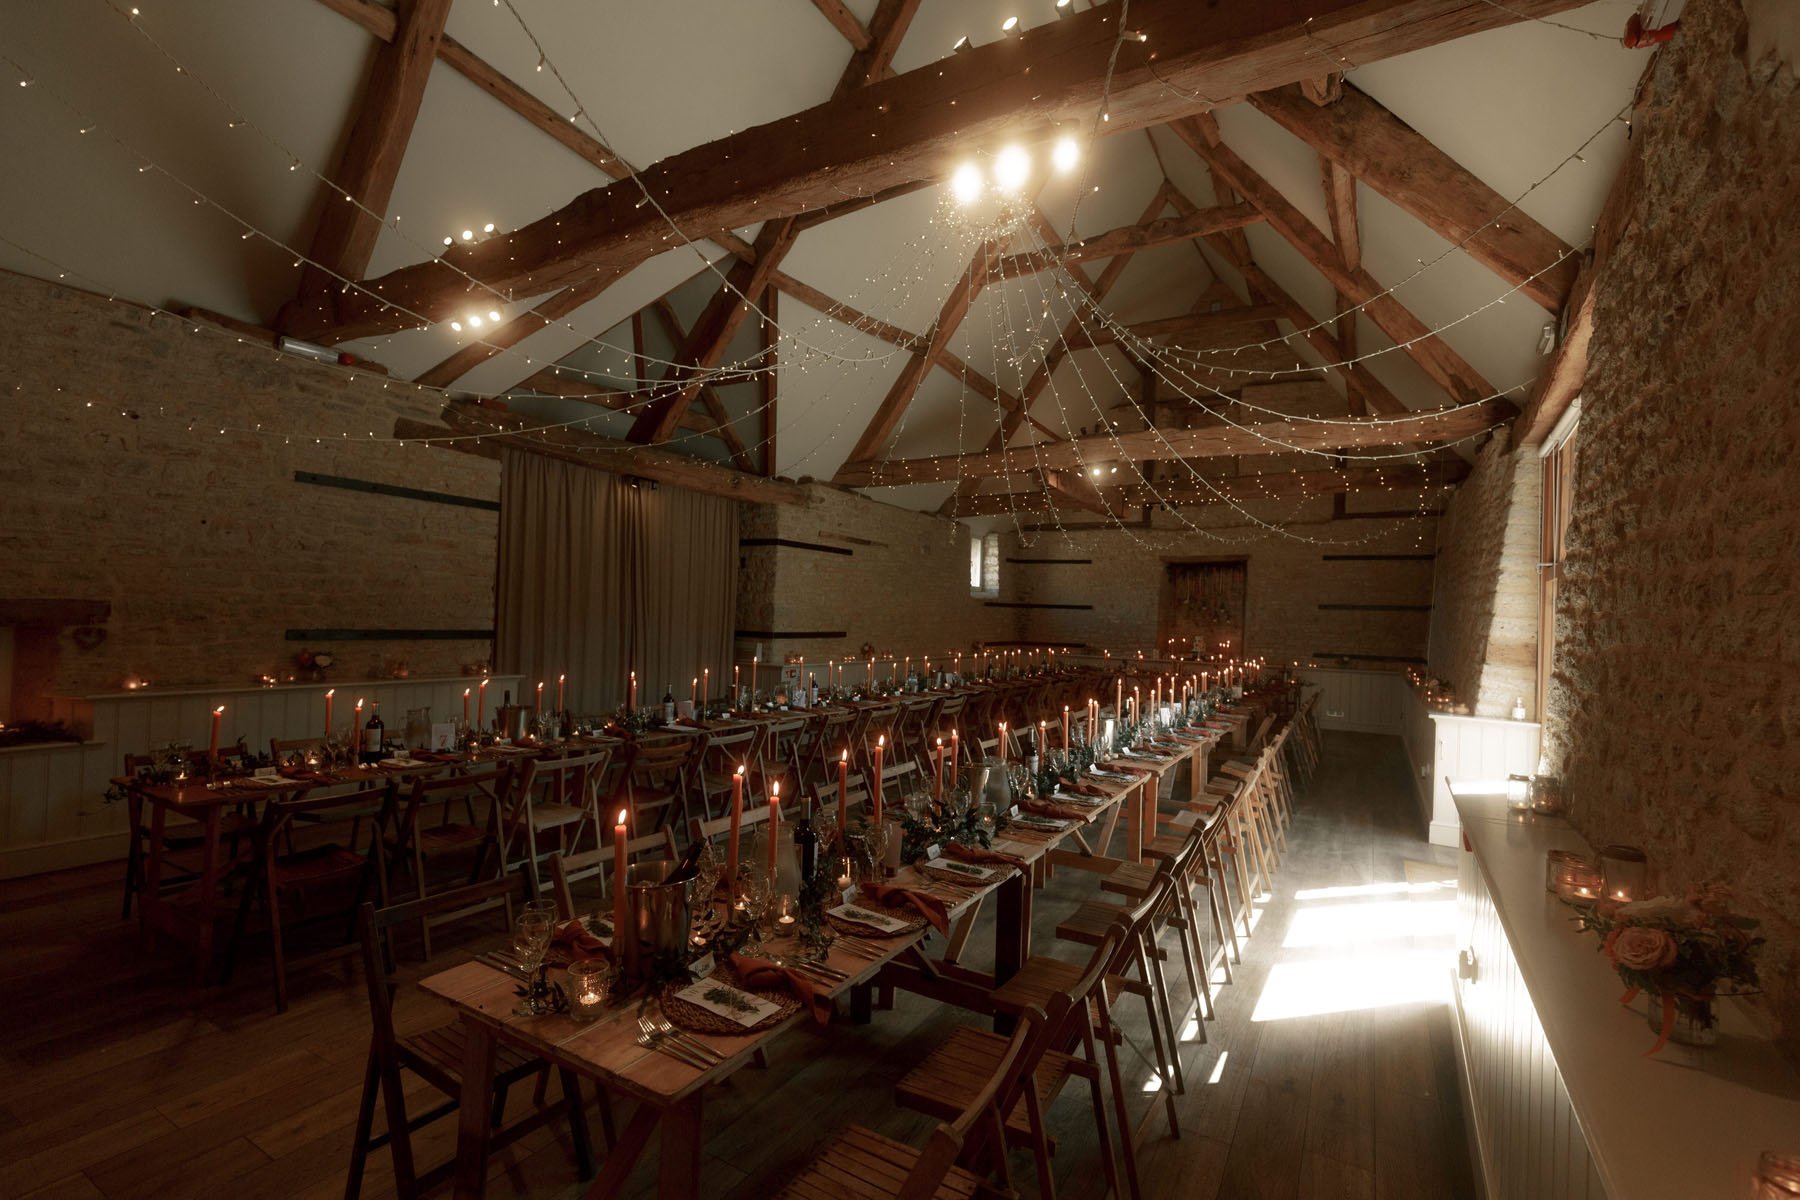 Wick farm barn wedding venue, Bath. Beamed barn reception room with wooden trestle tables.